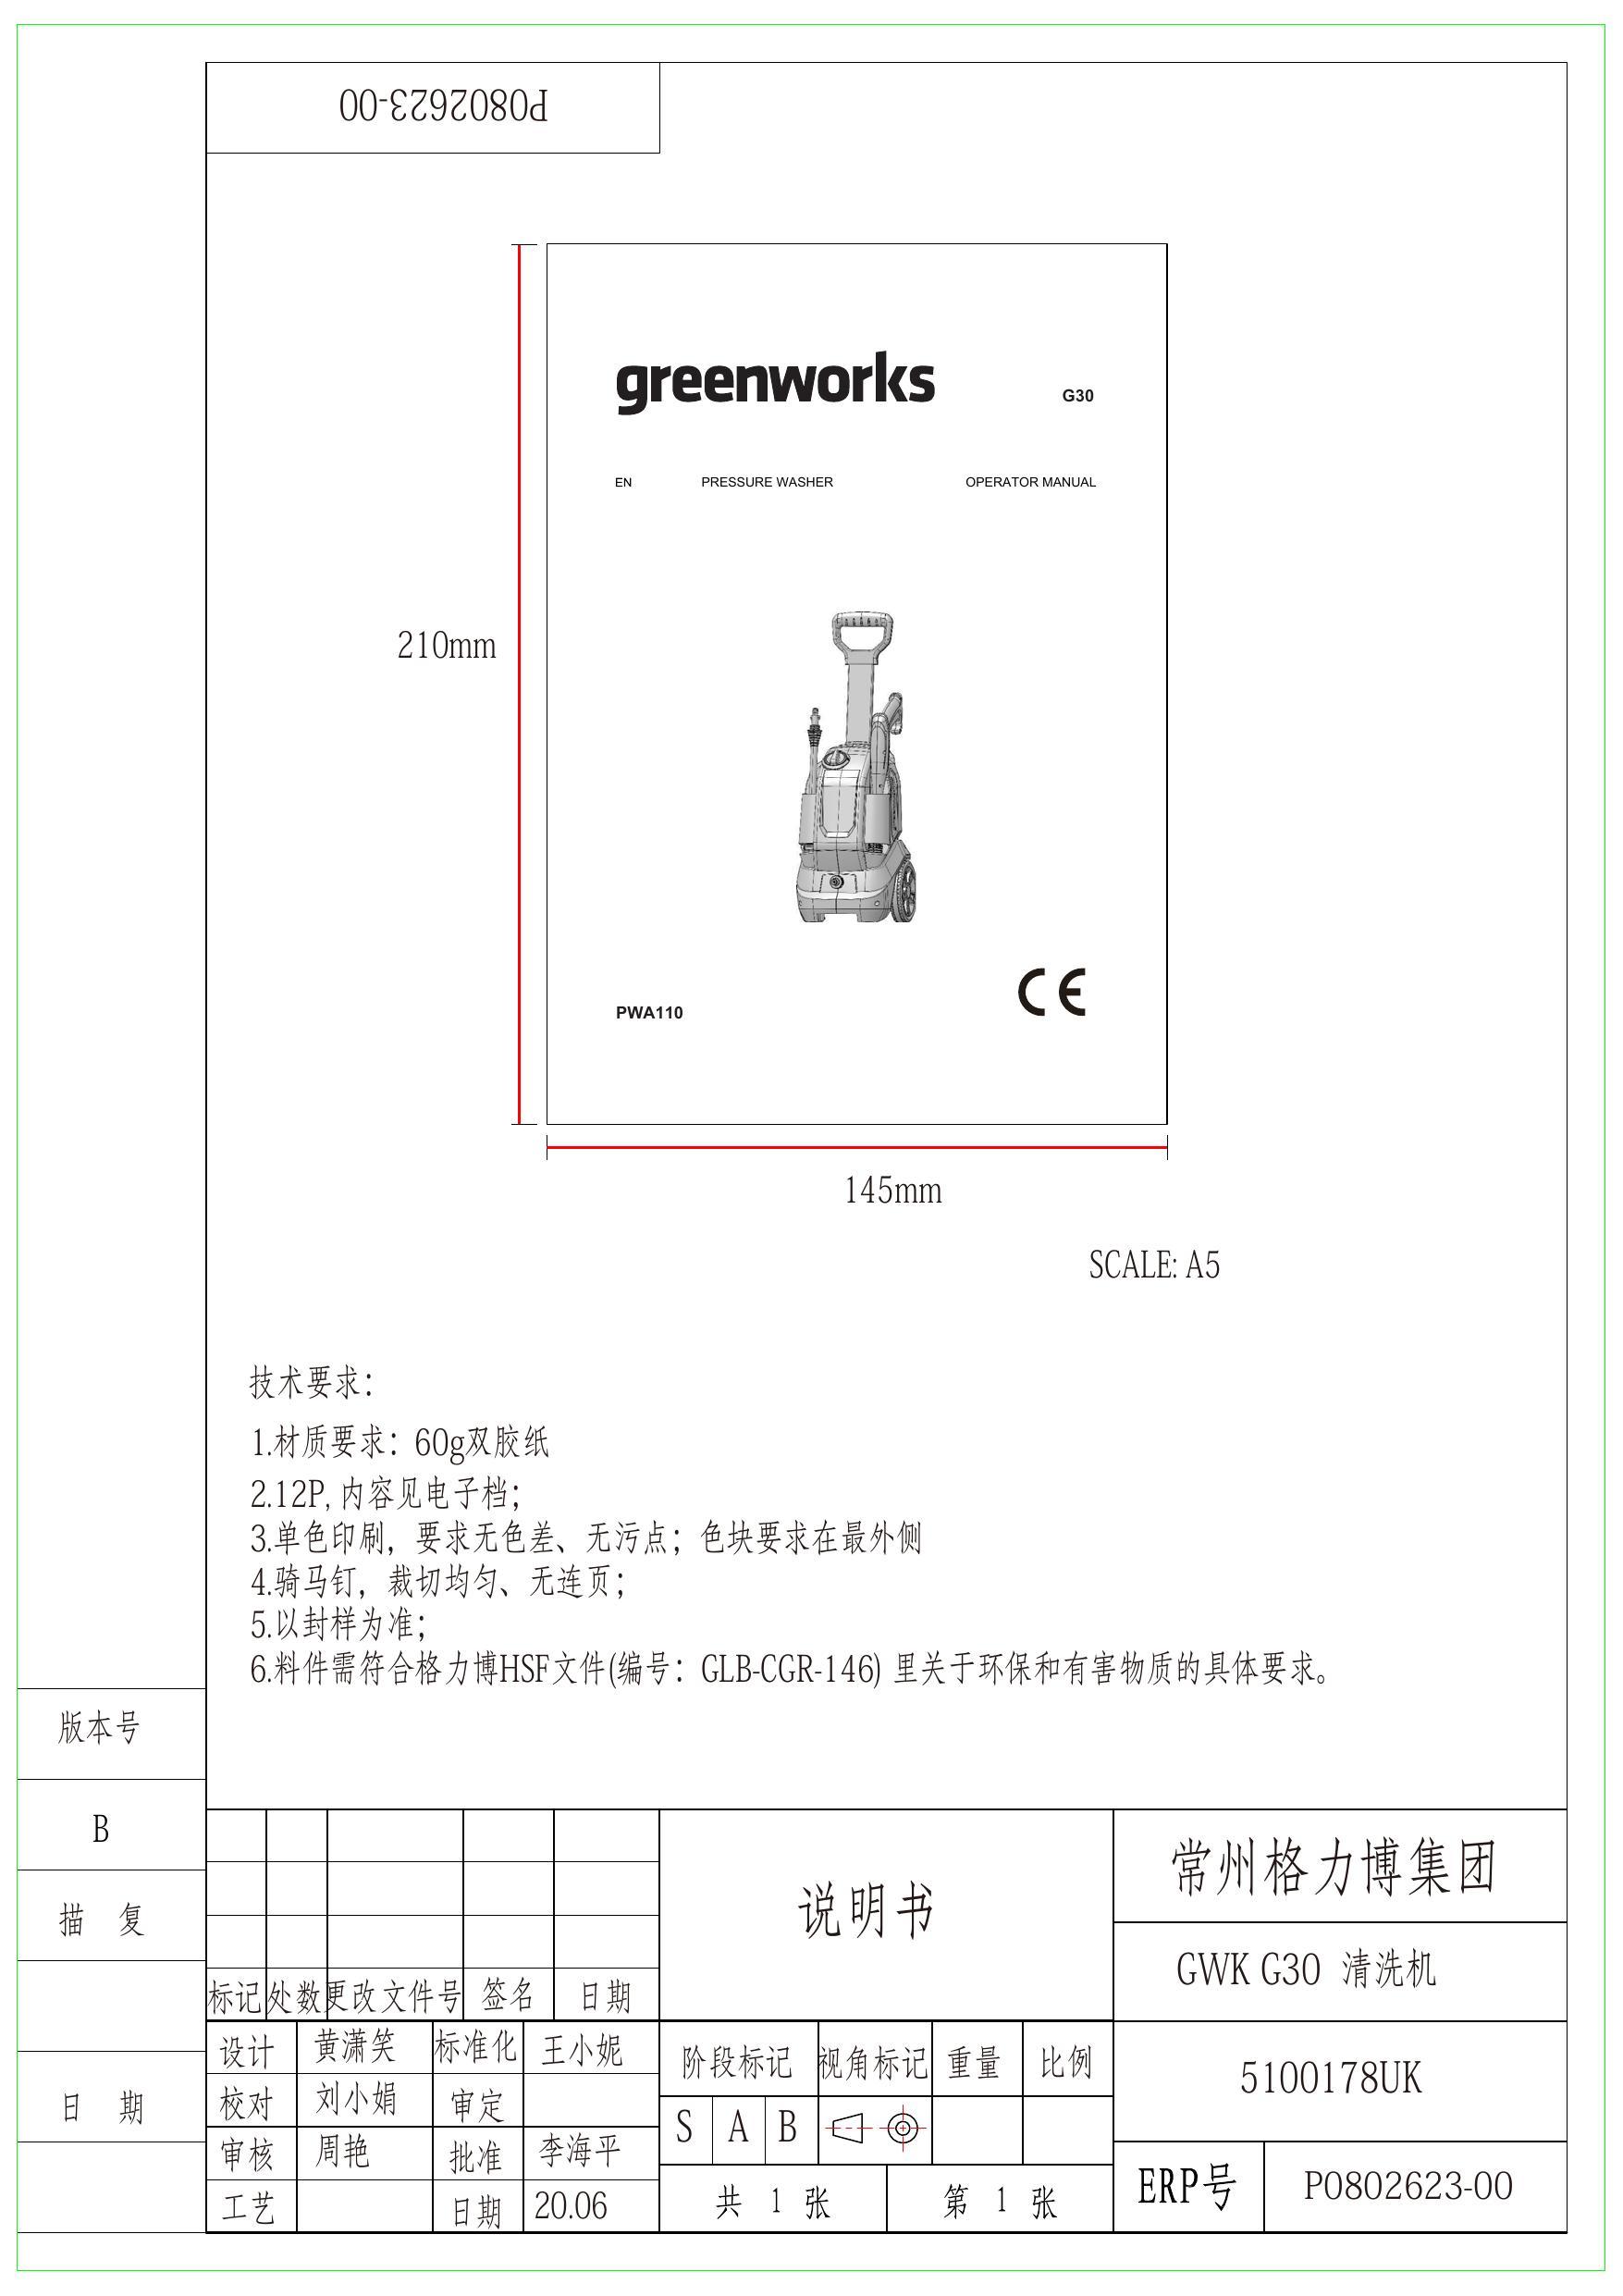 greenworks-g30-pressure-washer-operator-manual.pdf